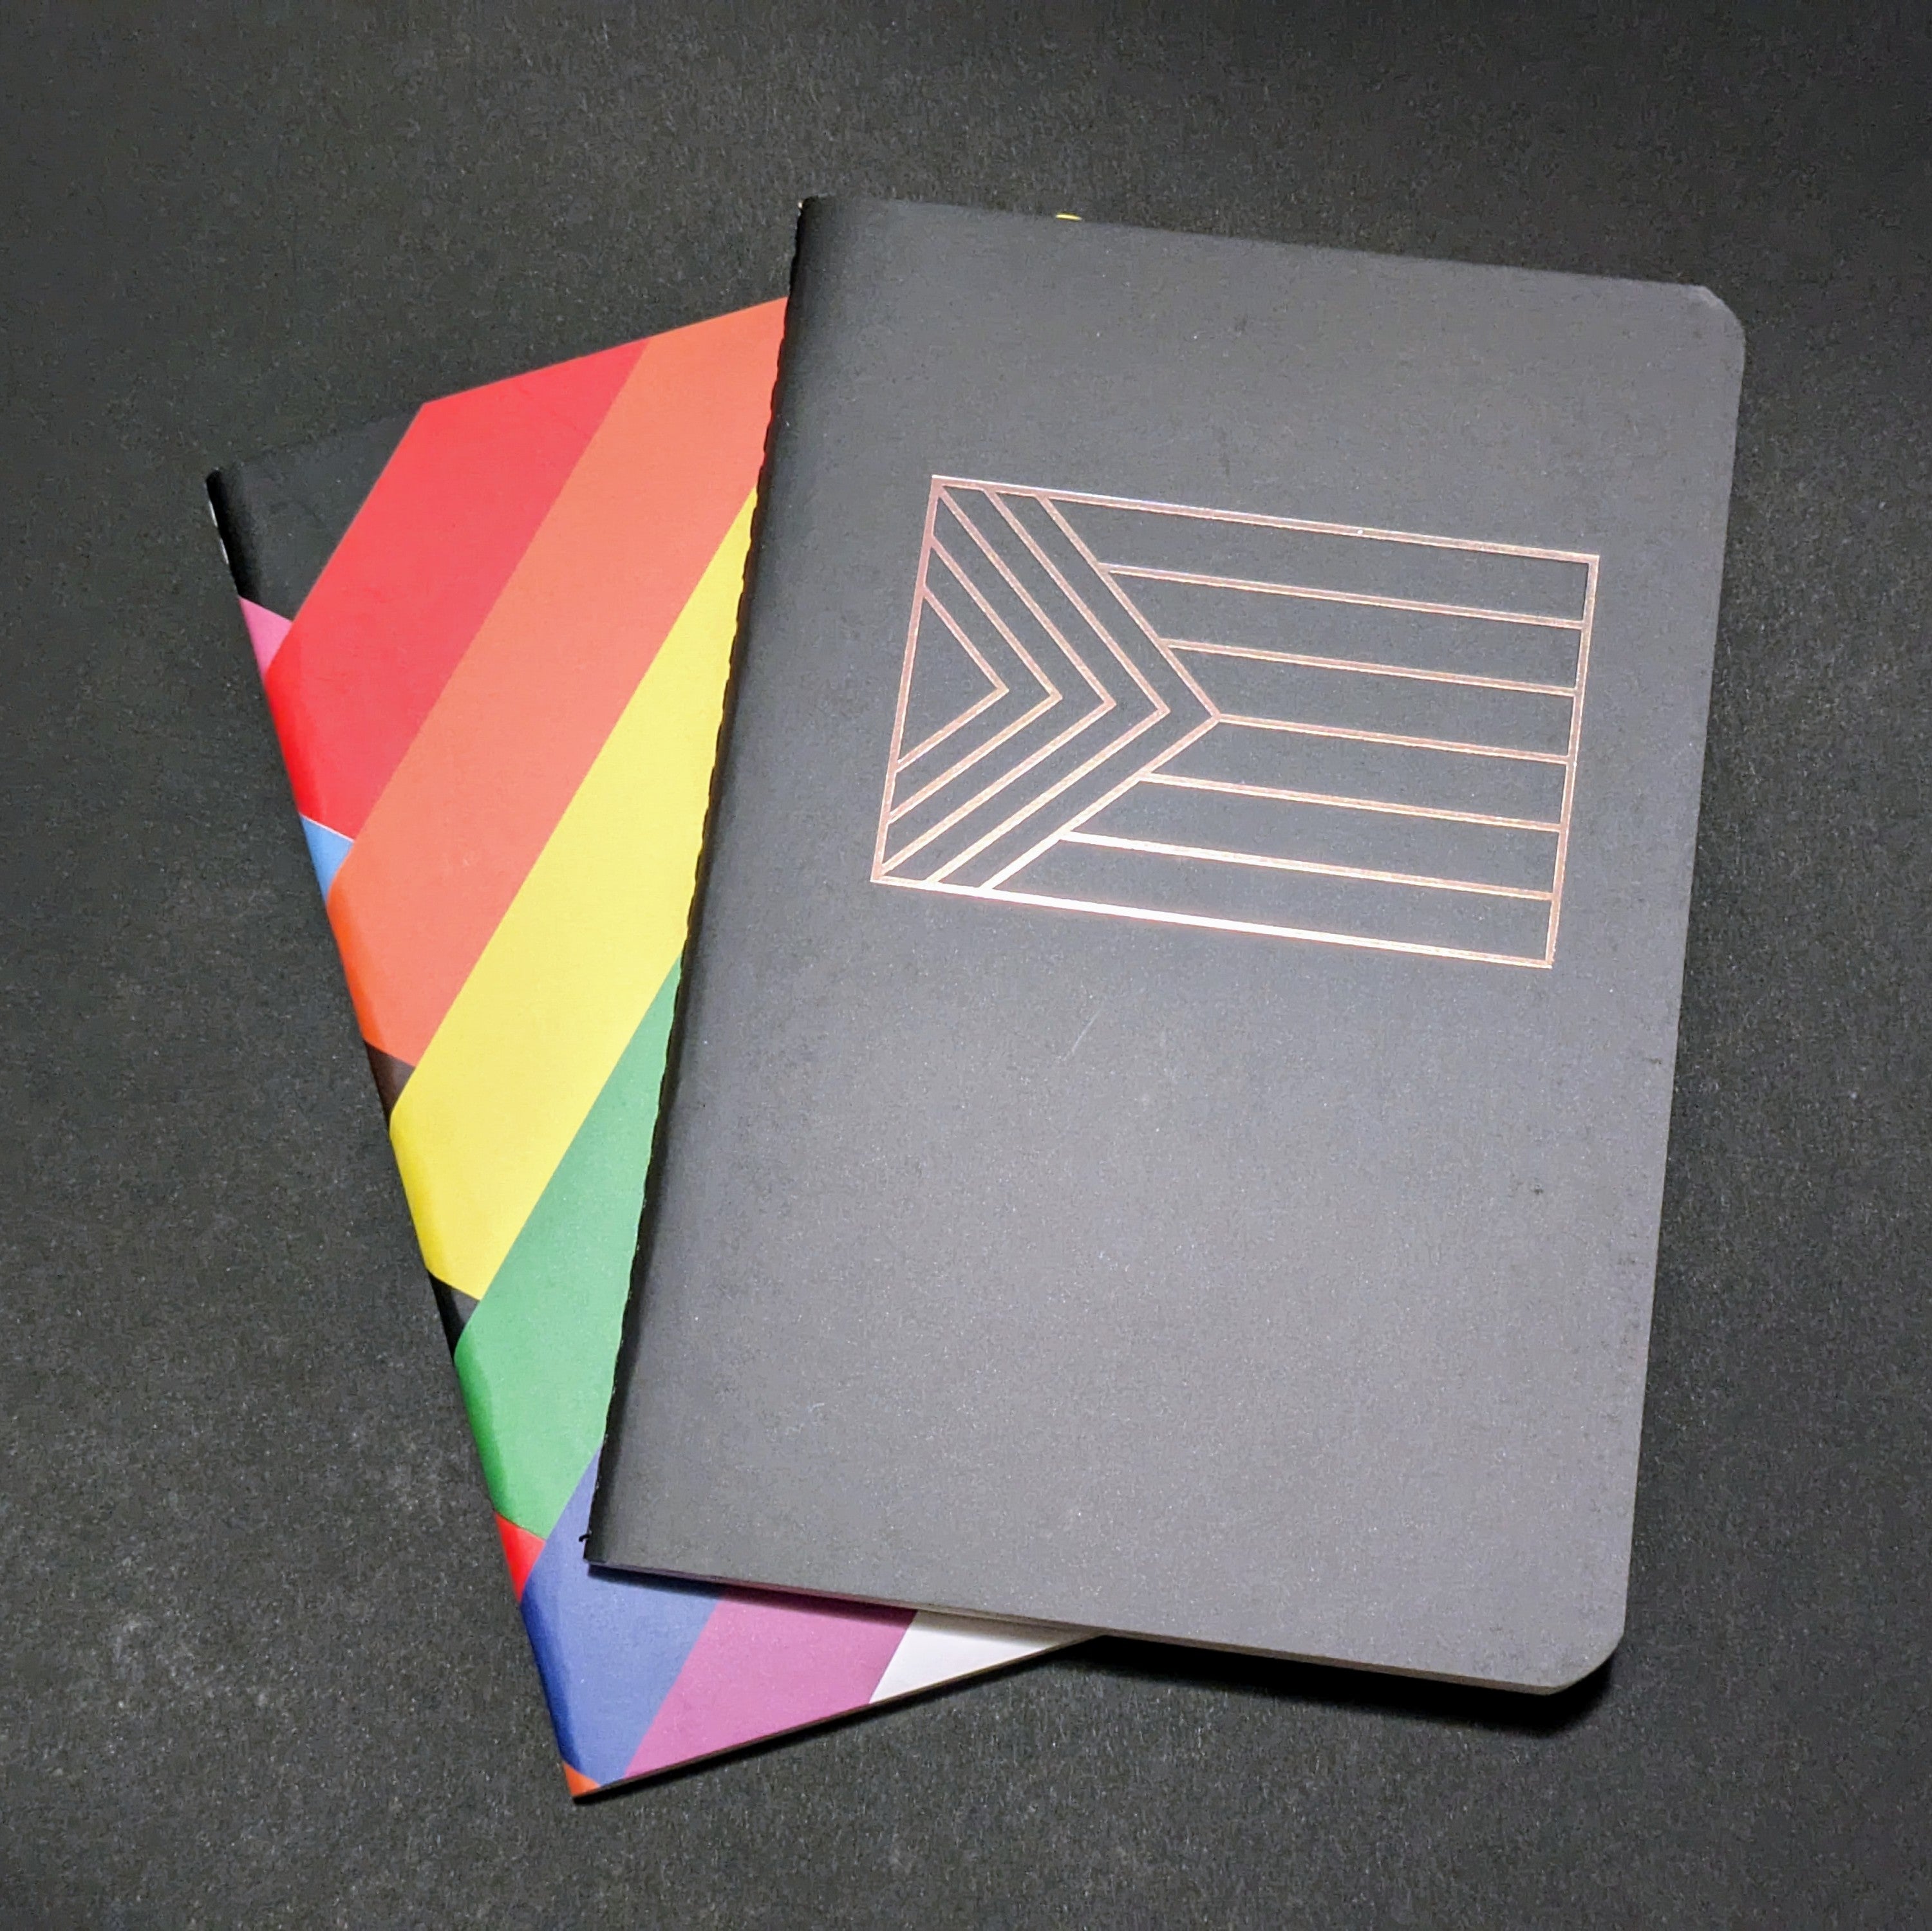 Progress Notebook (Set with Sticker Sheets)